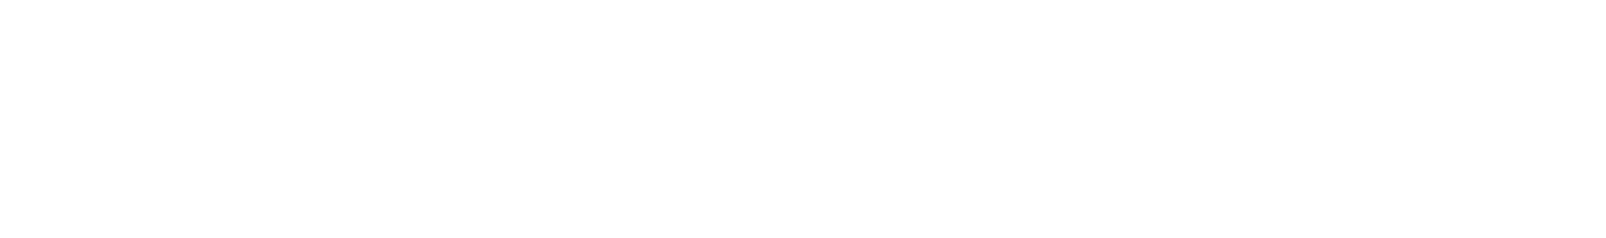 Enovix Logo groß für dunkle Hintergründe (transparentes PNG)